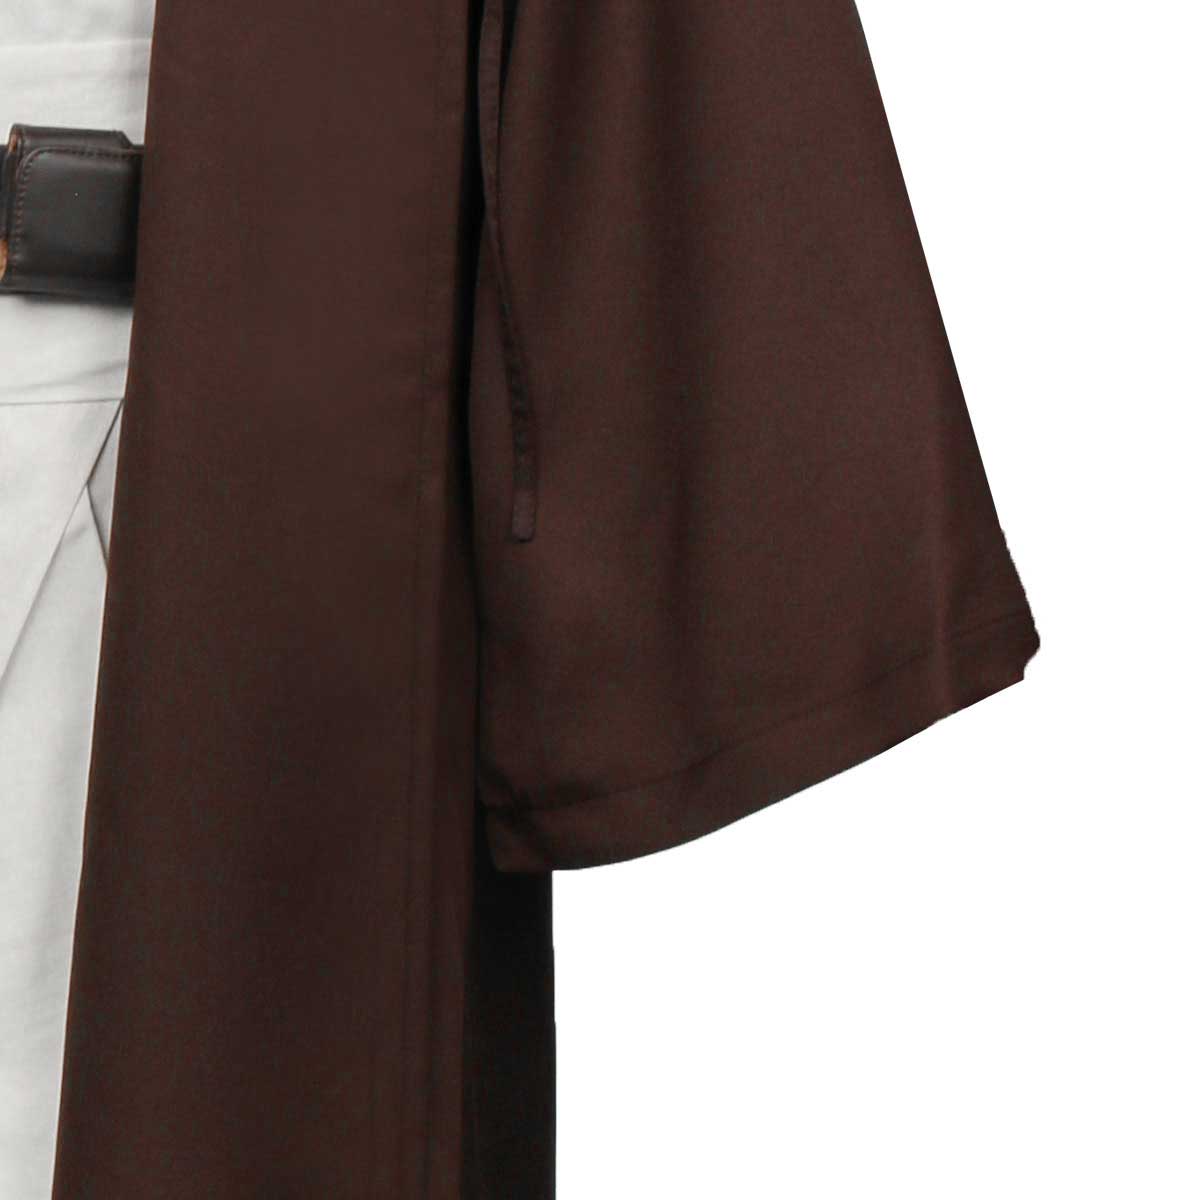 Star Wars Robe Obi Wan Kenobi Jedi Cosplay Costume Original Robes Tunic Halloween Hooded Cloak Robe Uniform Full Set